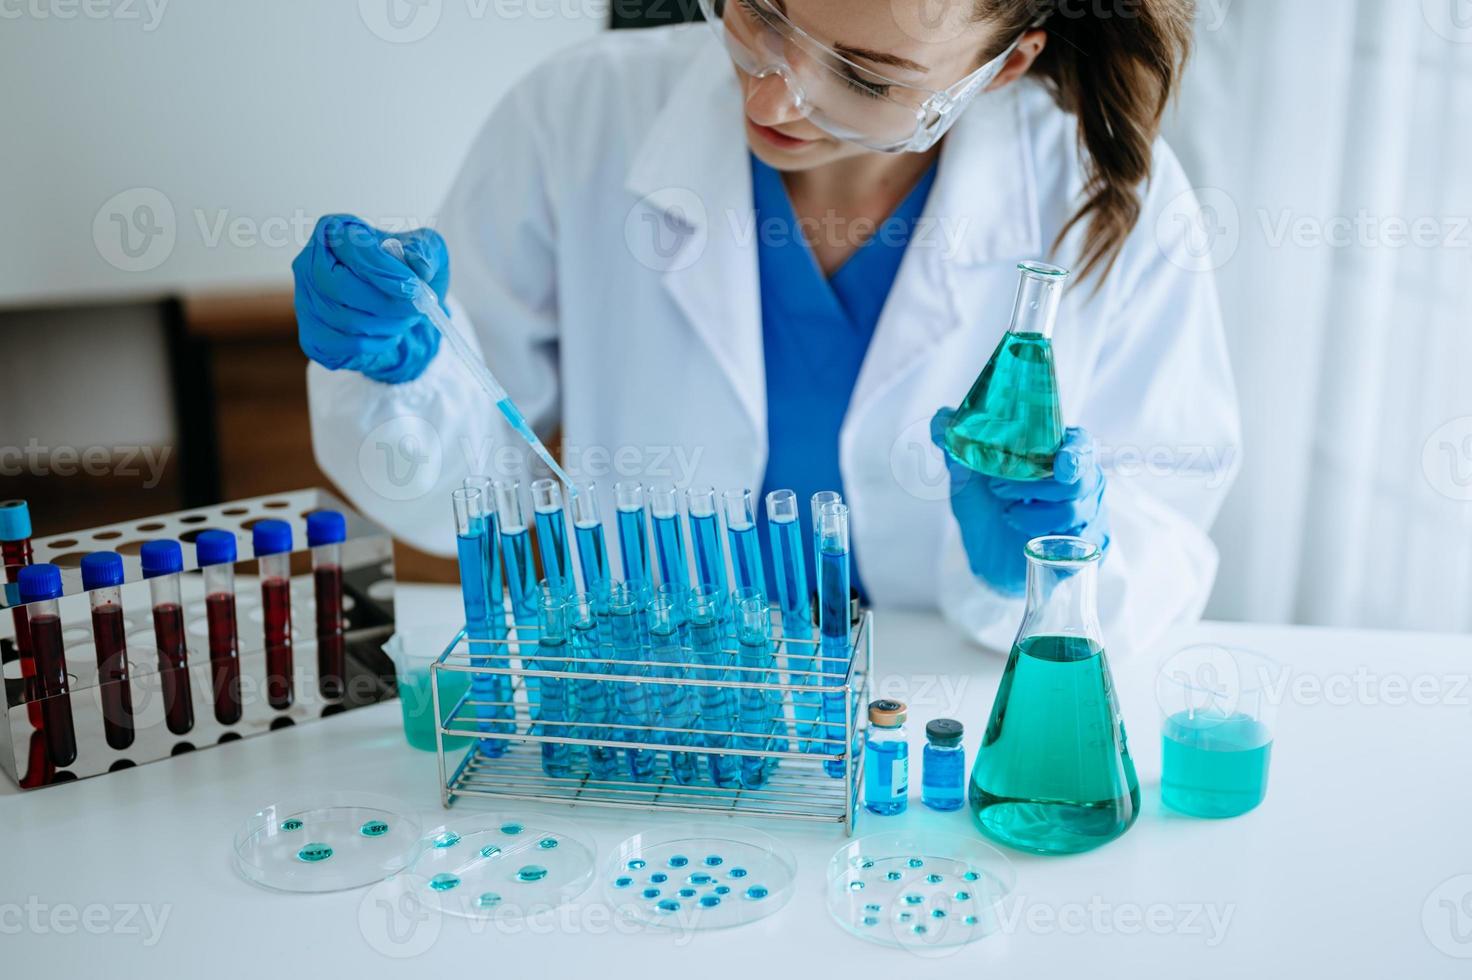 cientista misturando líquidos químicos no laboratório de química. pesquisador trabalhando no laboratório químico foto